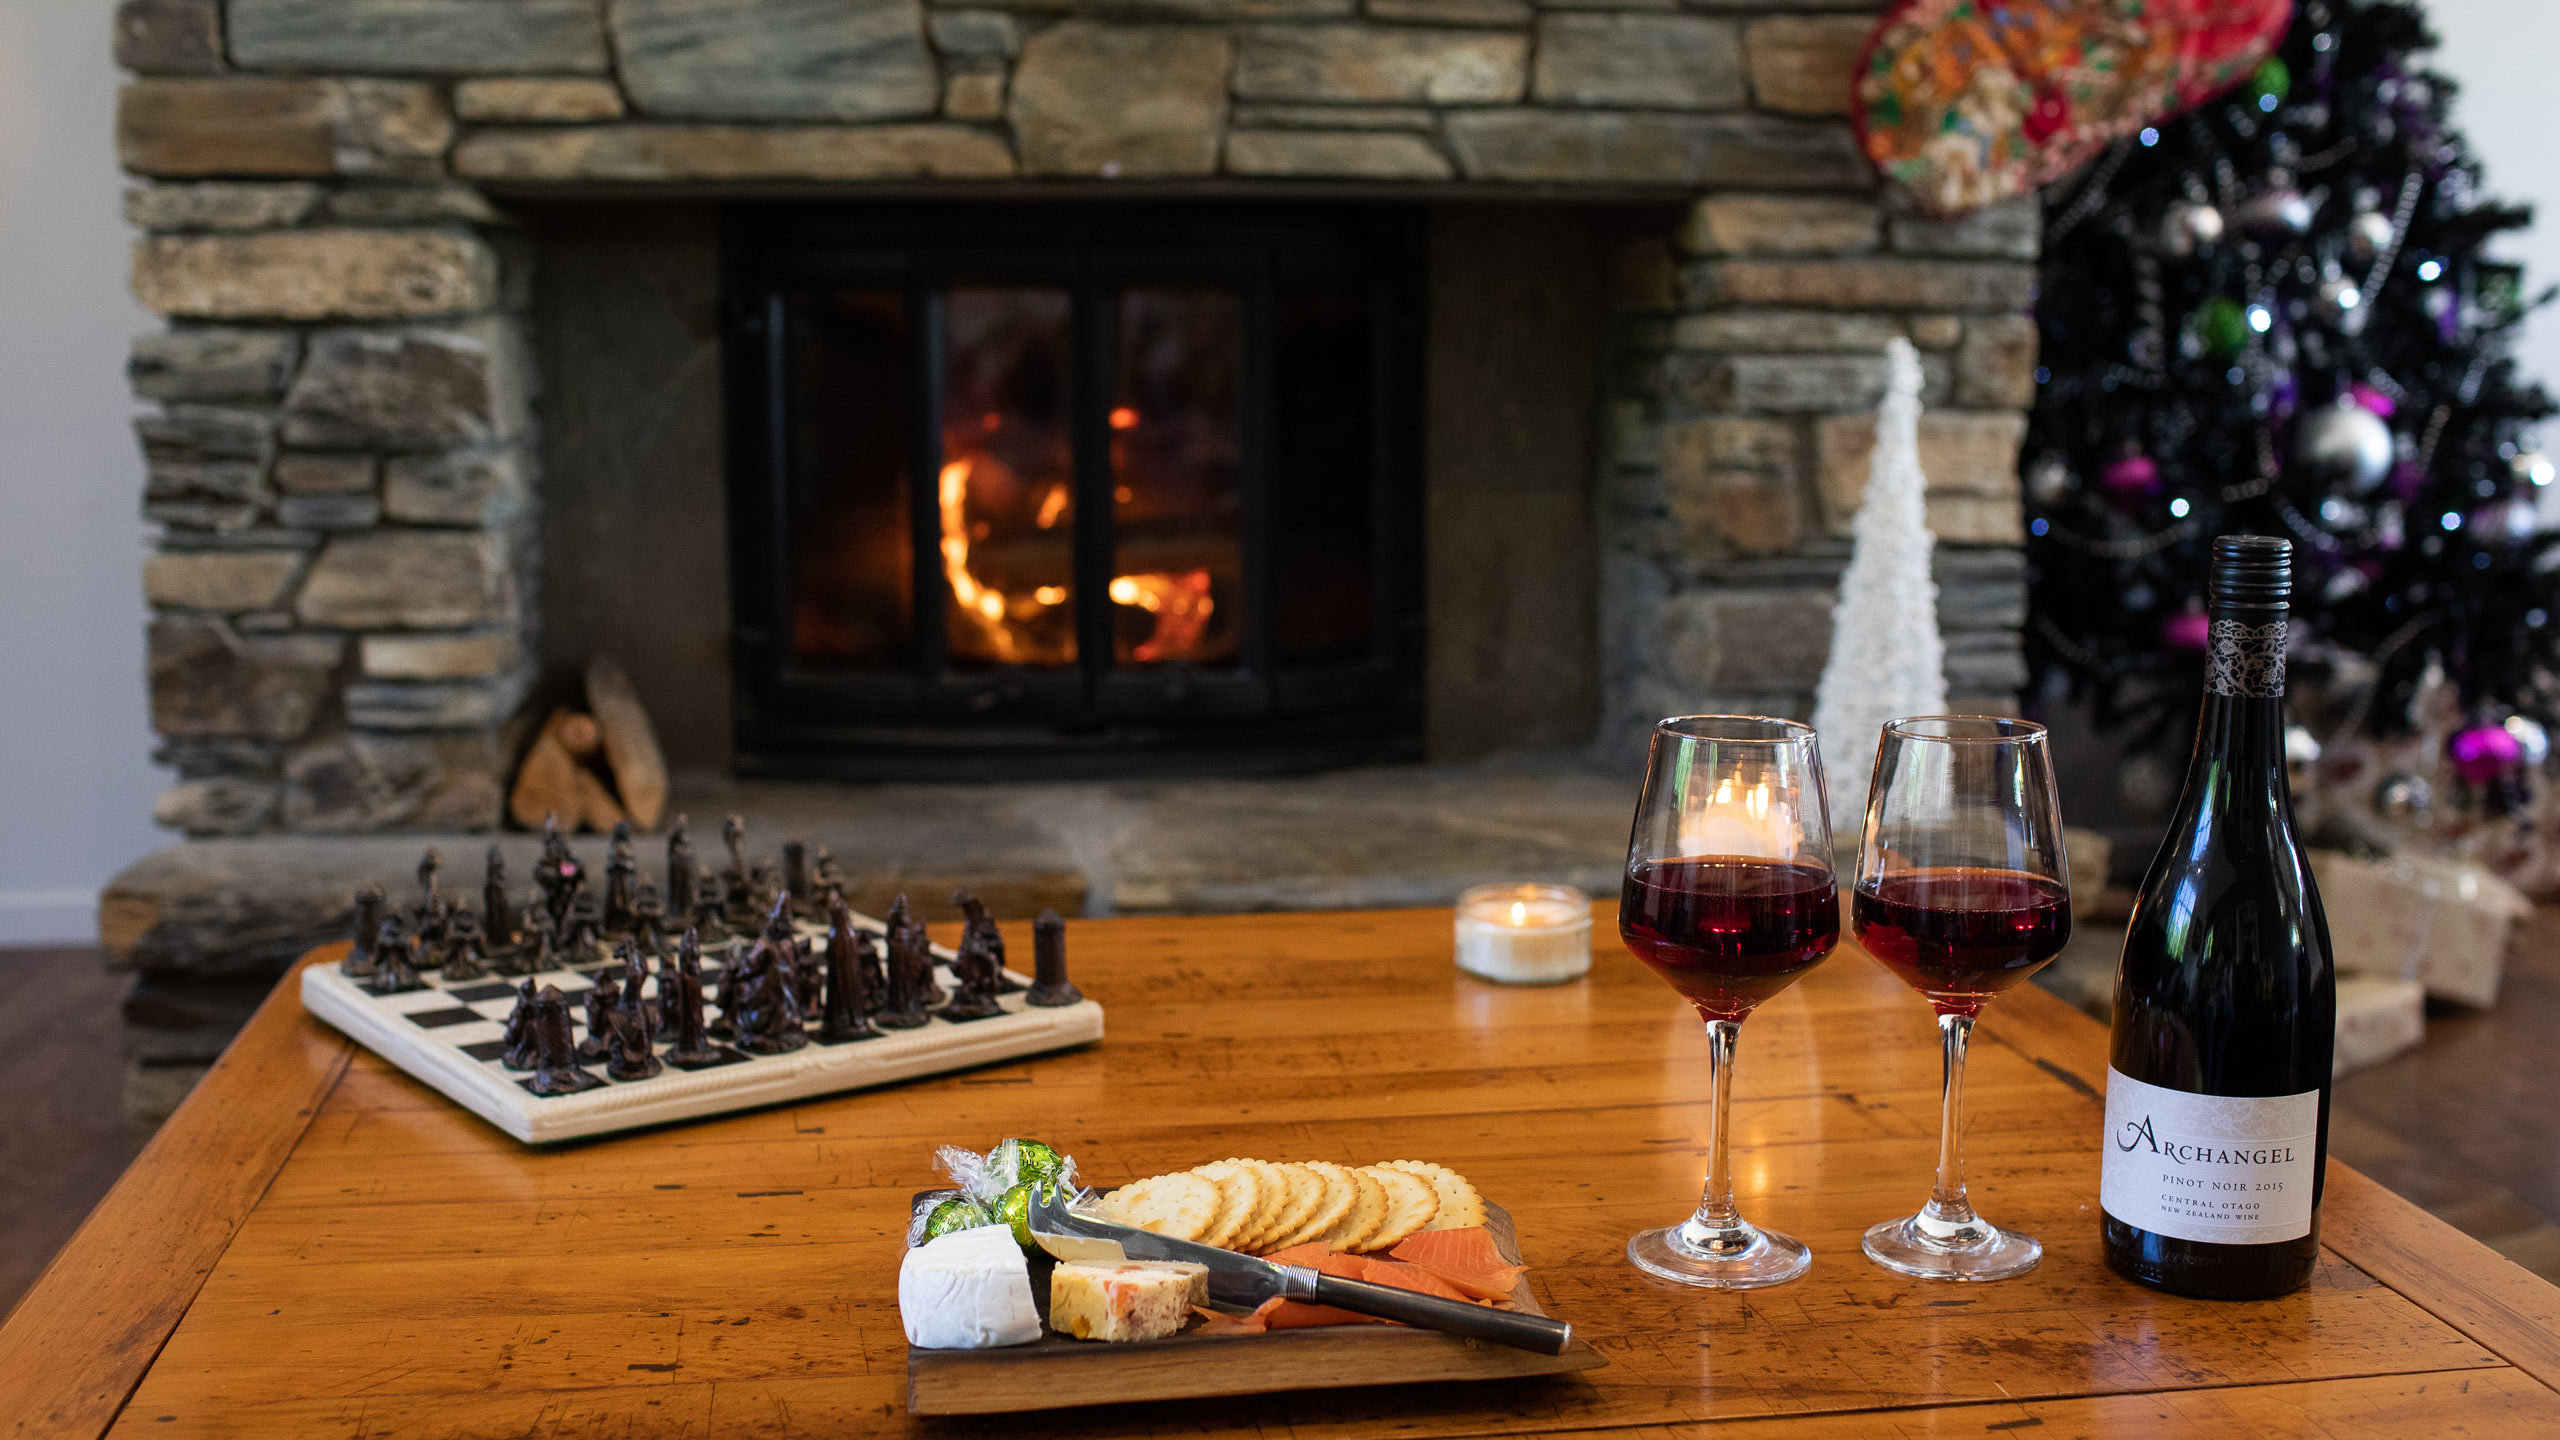 maple-lodge-wanaka-new-zealand-fireplace-and-wine